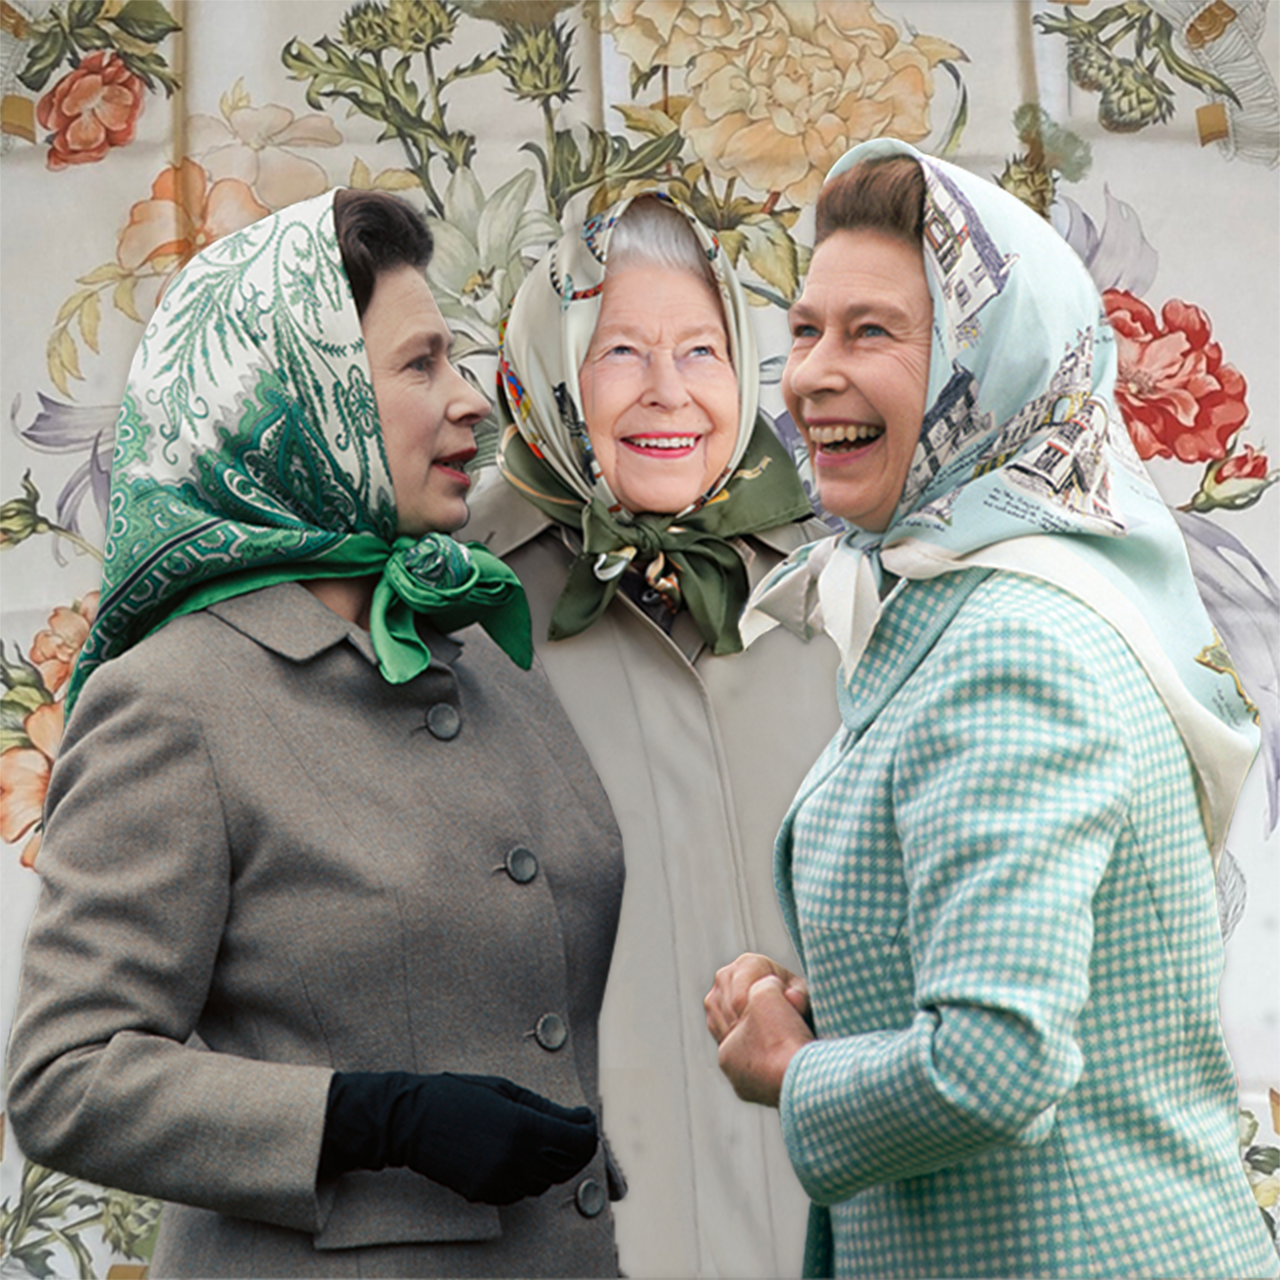 The queen wears various silk scarves